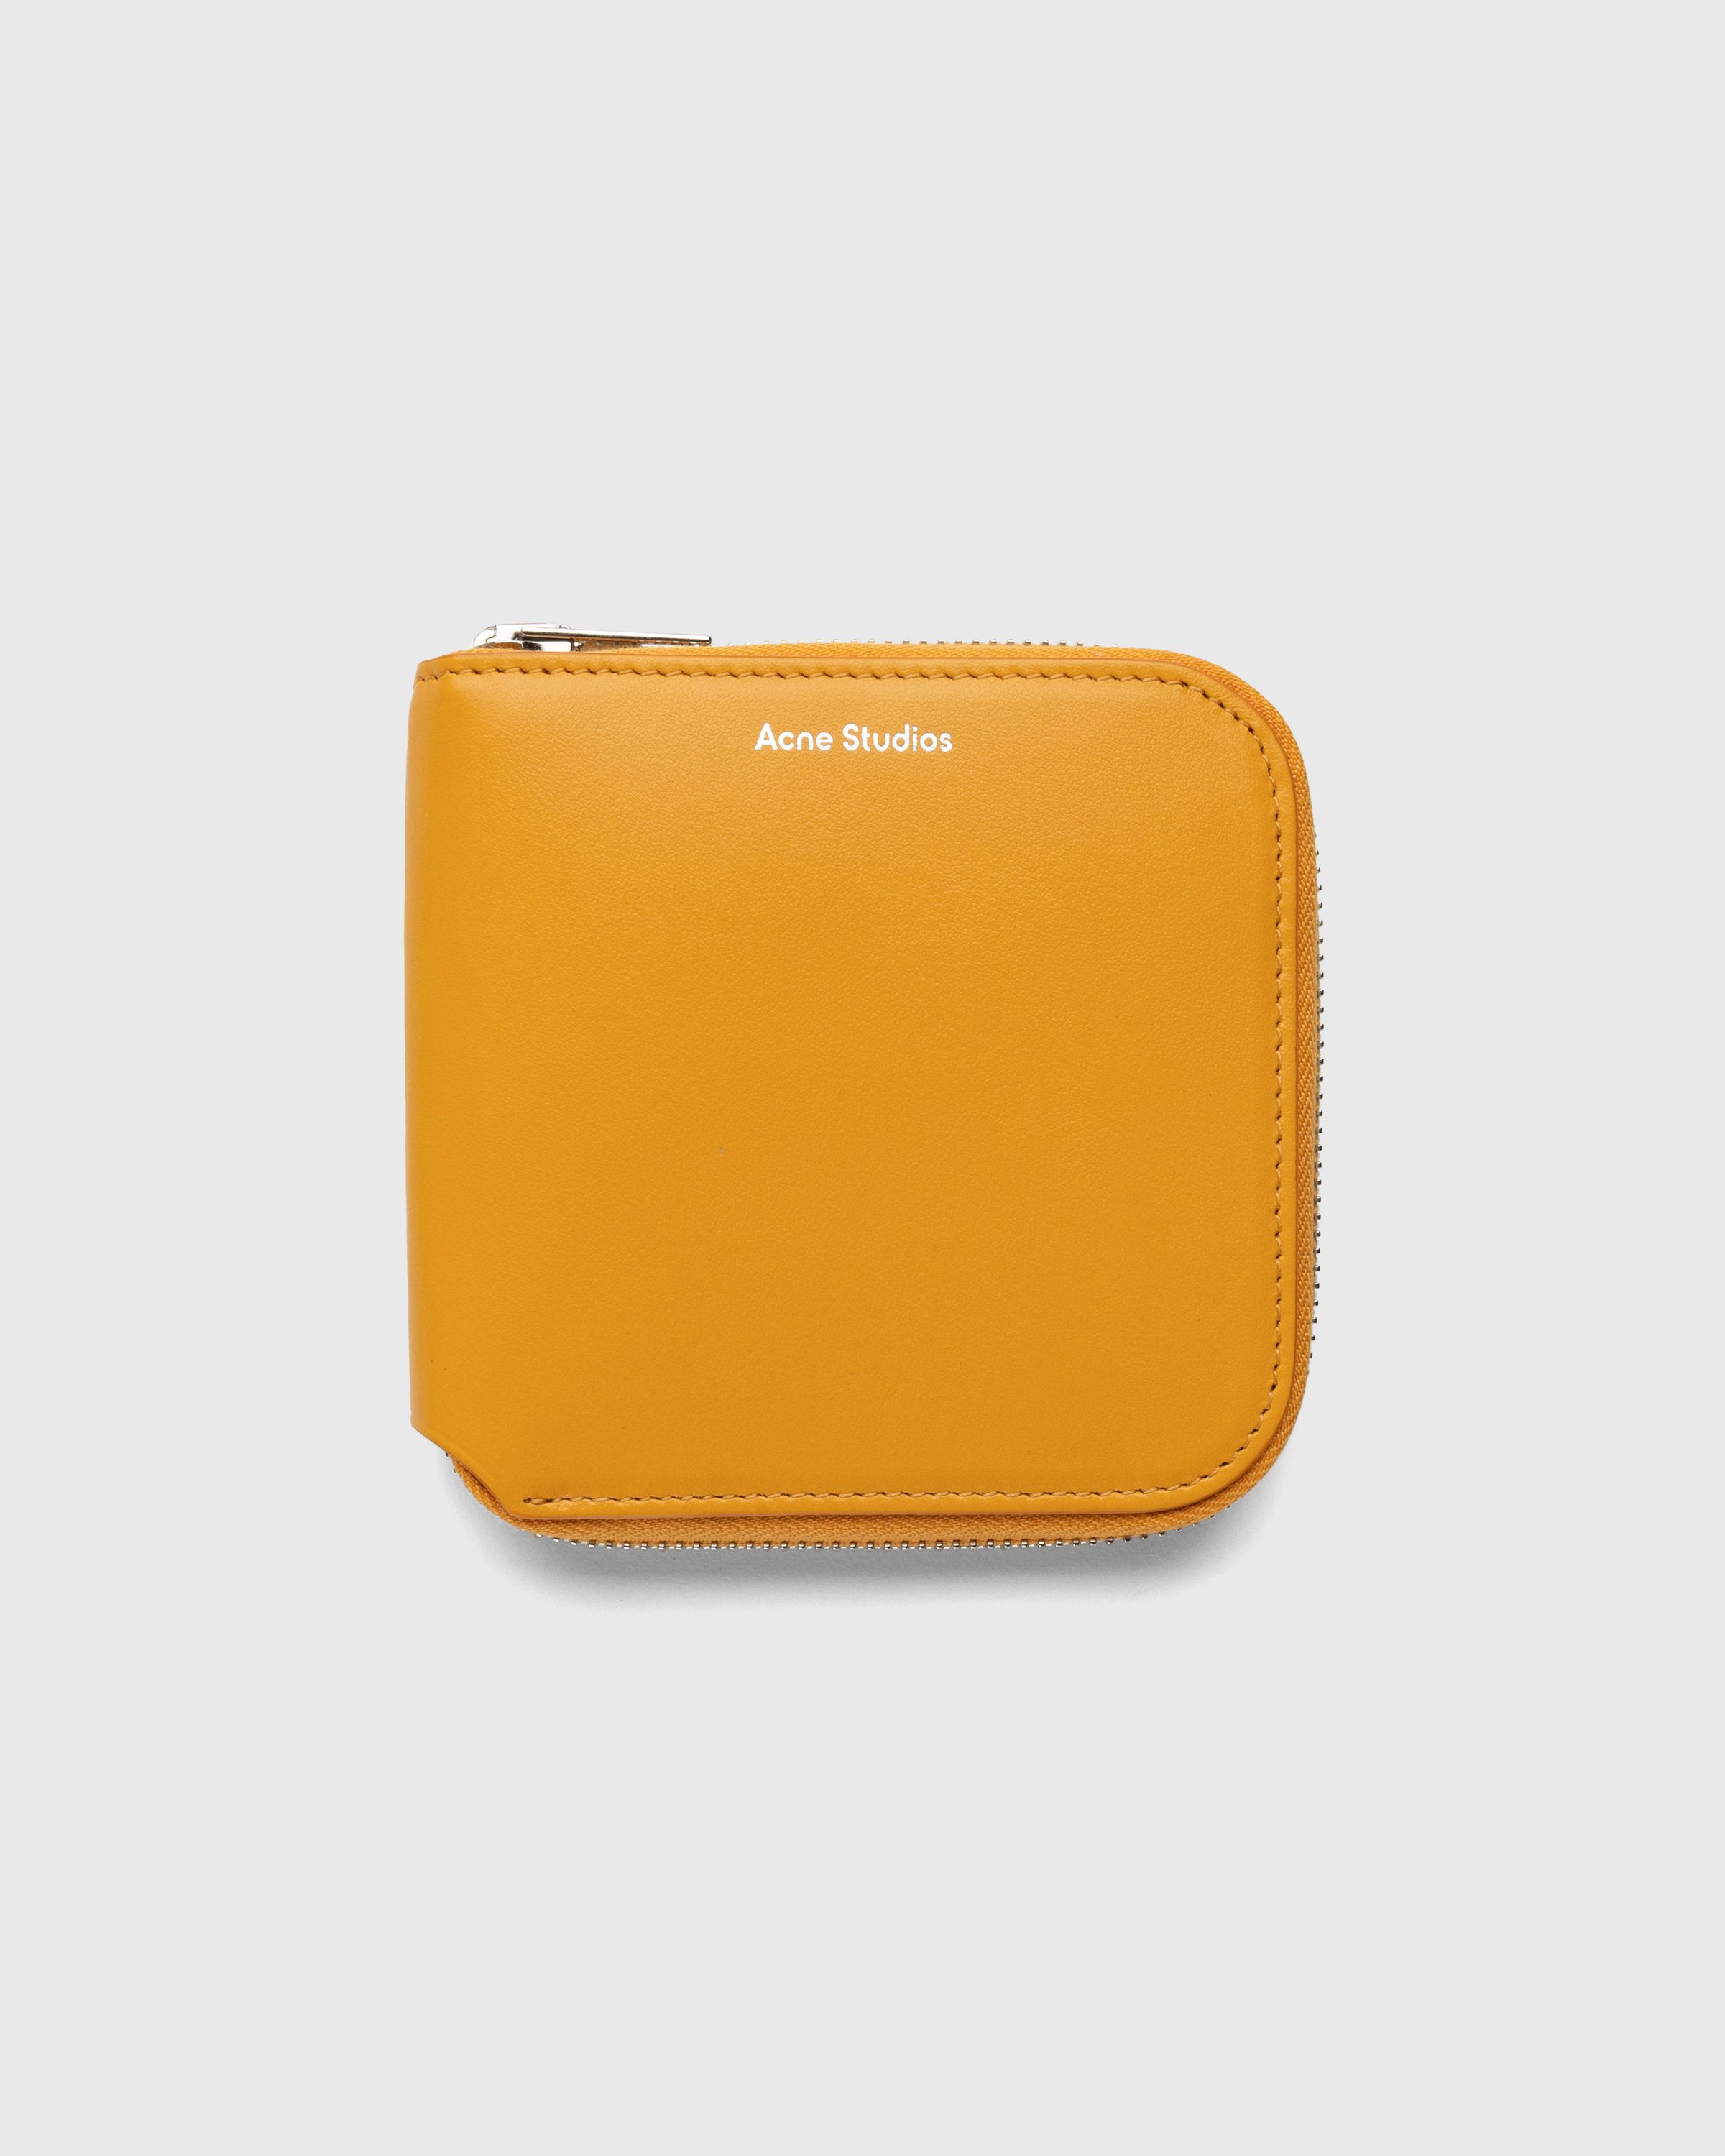 Acne Studios - Leather Zip Wallet Orange - Accessories - Orange - Image 1